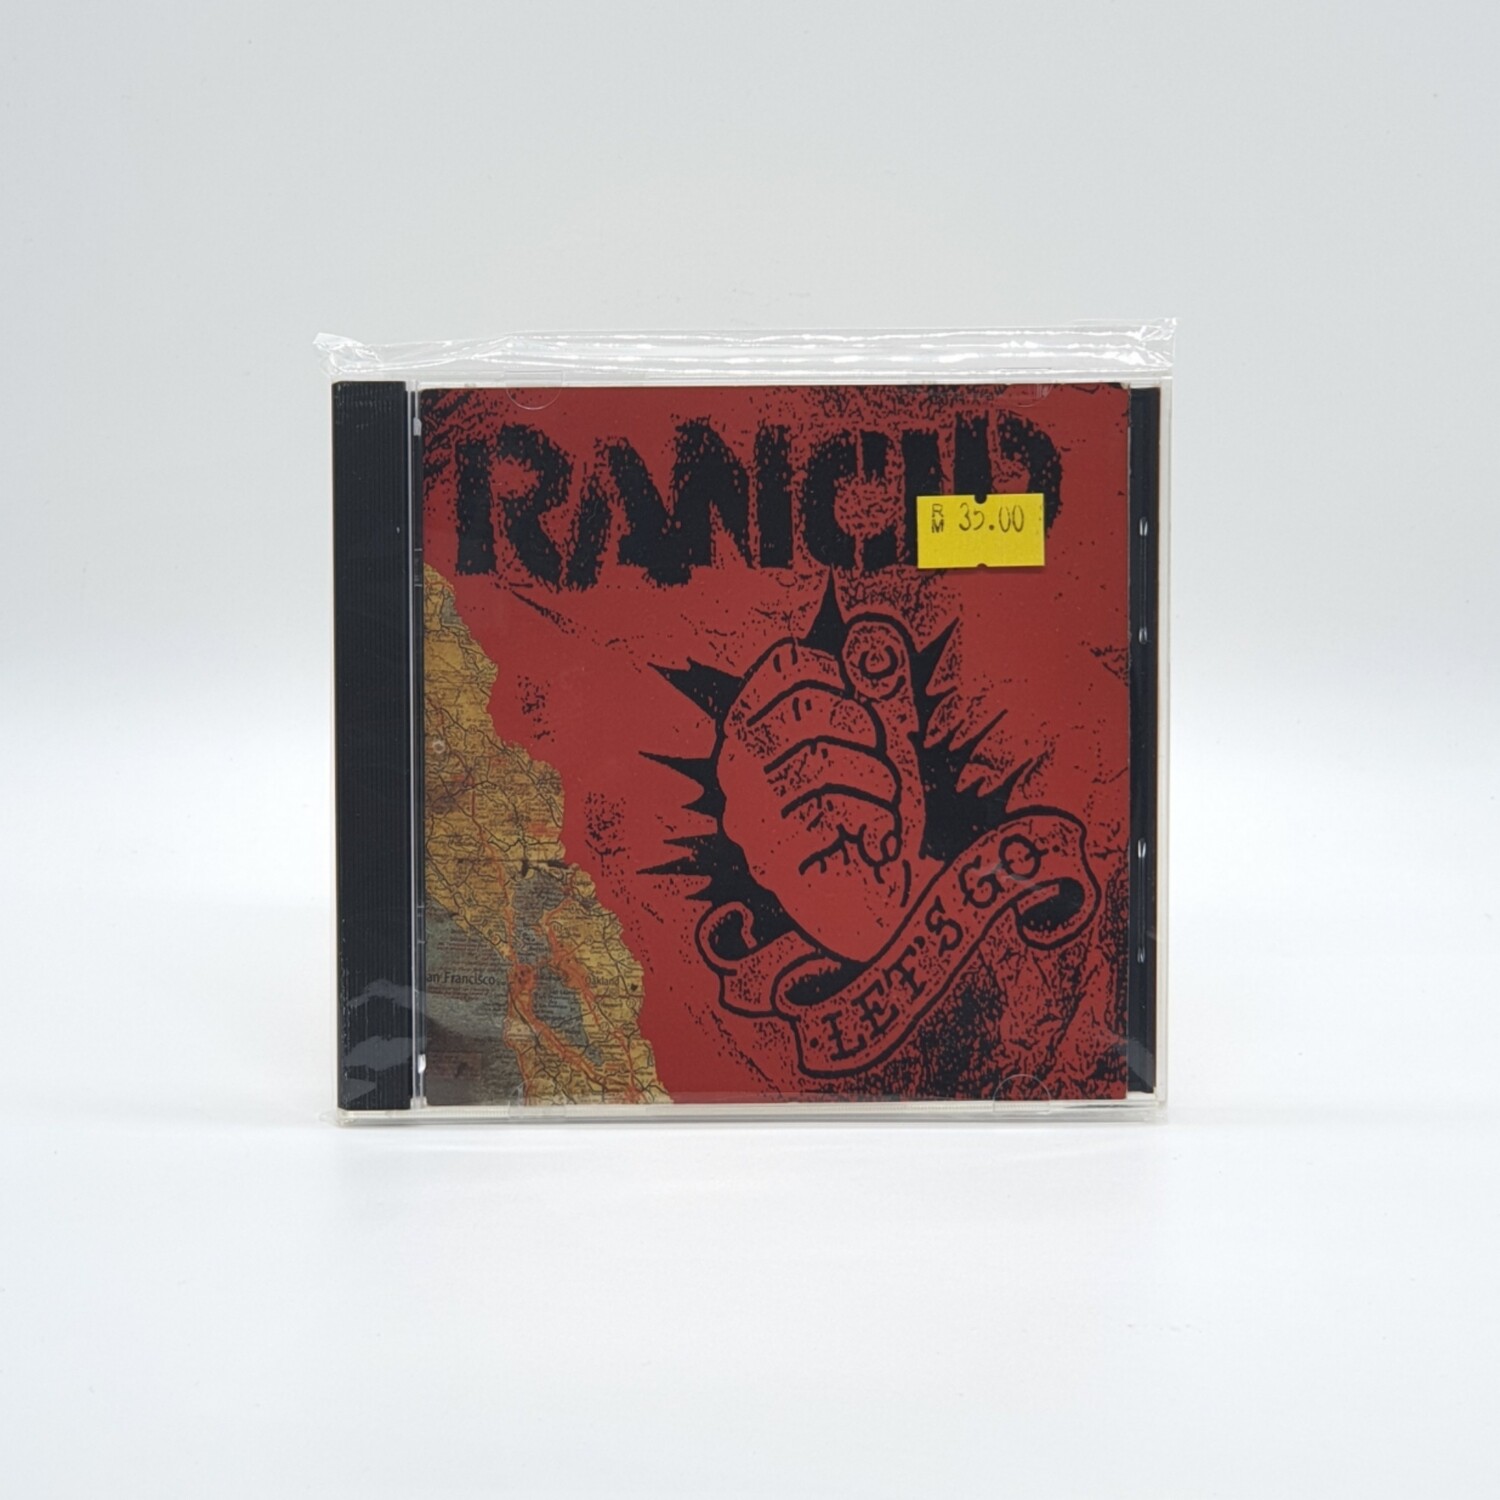 [USED] RANCID -LETS GO- CD 